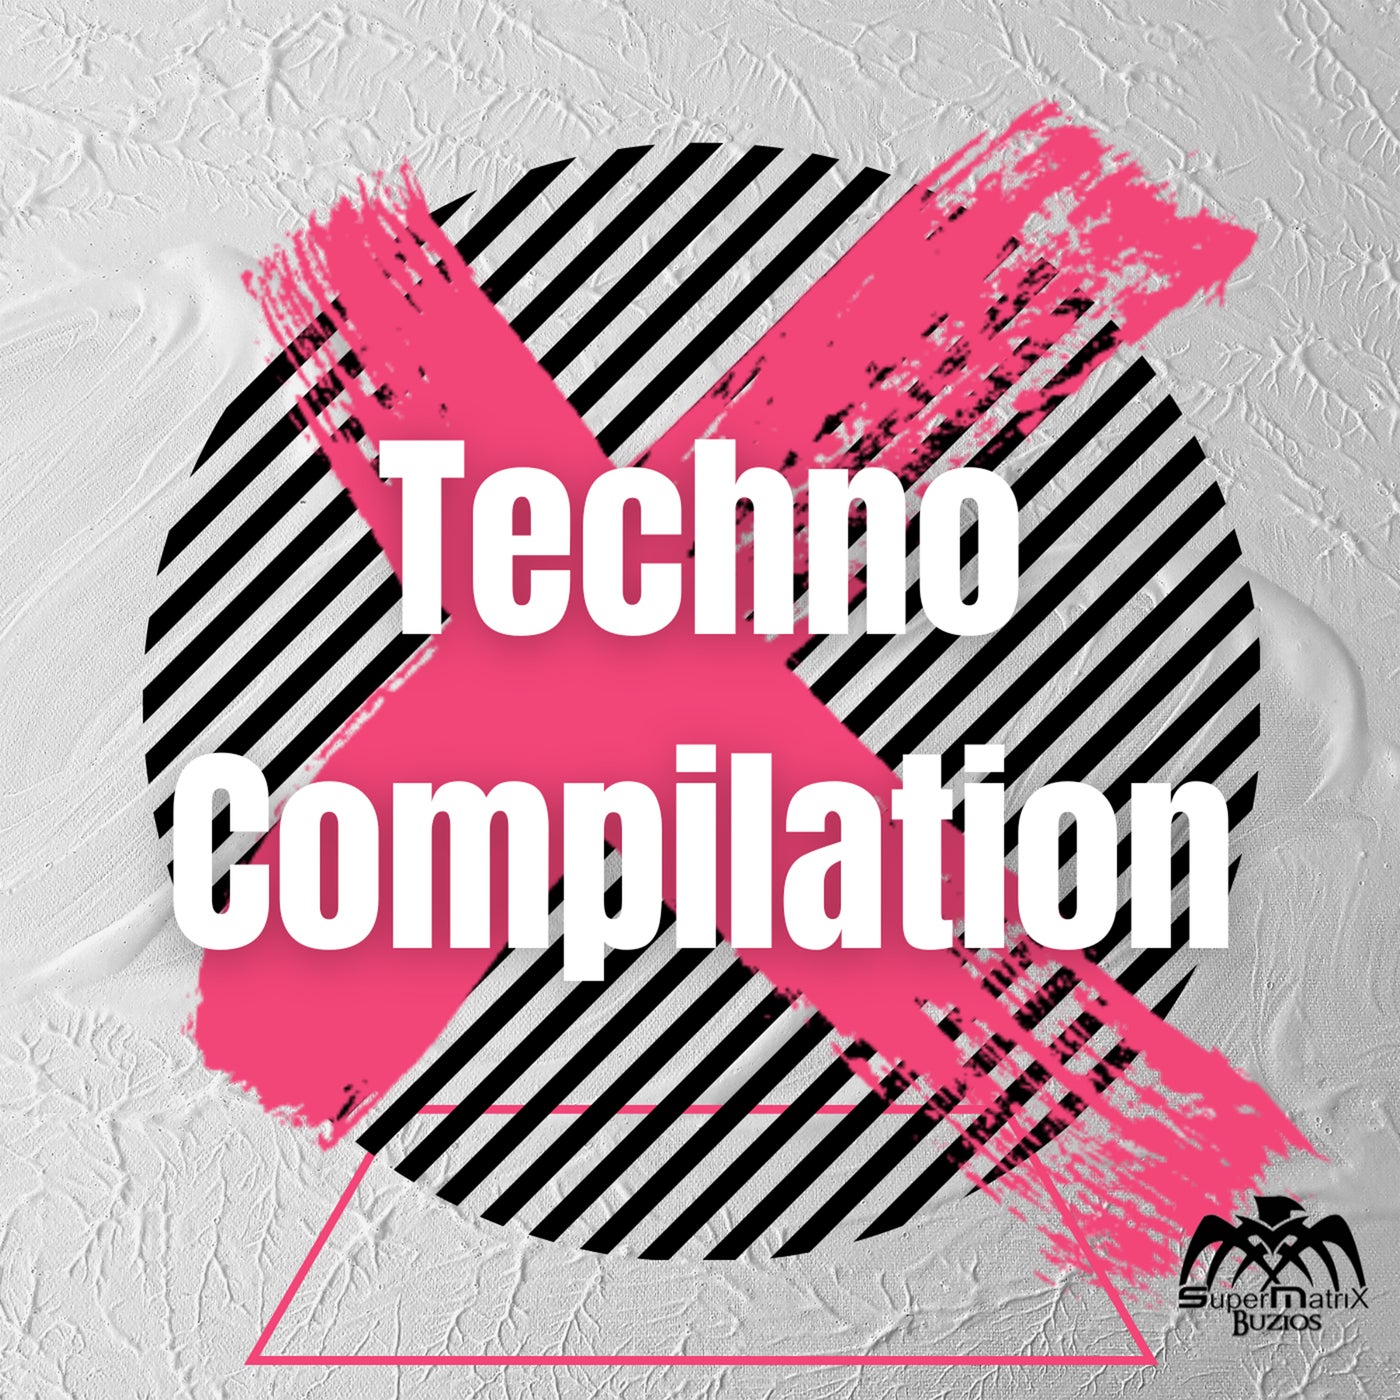 Techno Compilation